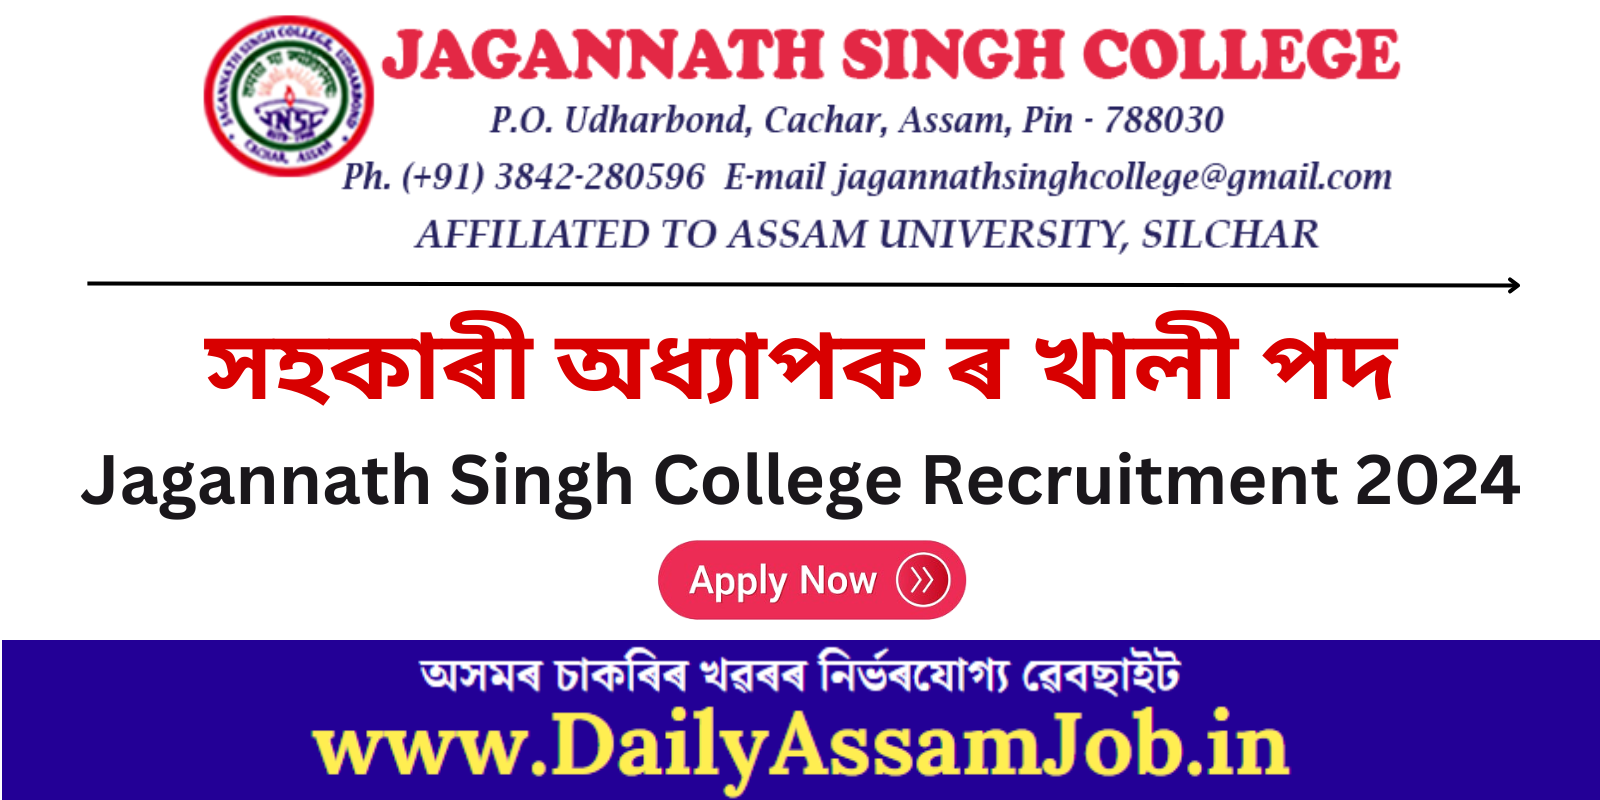 Jagannath Singh College Recruitment 2024